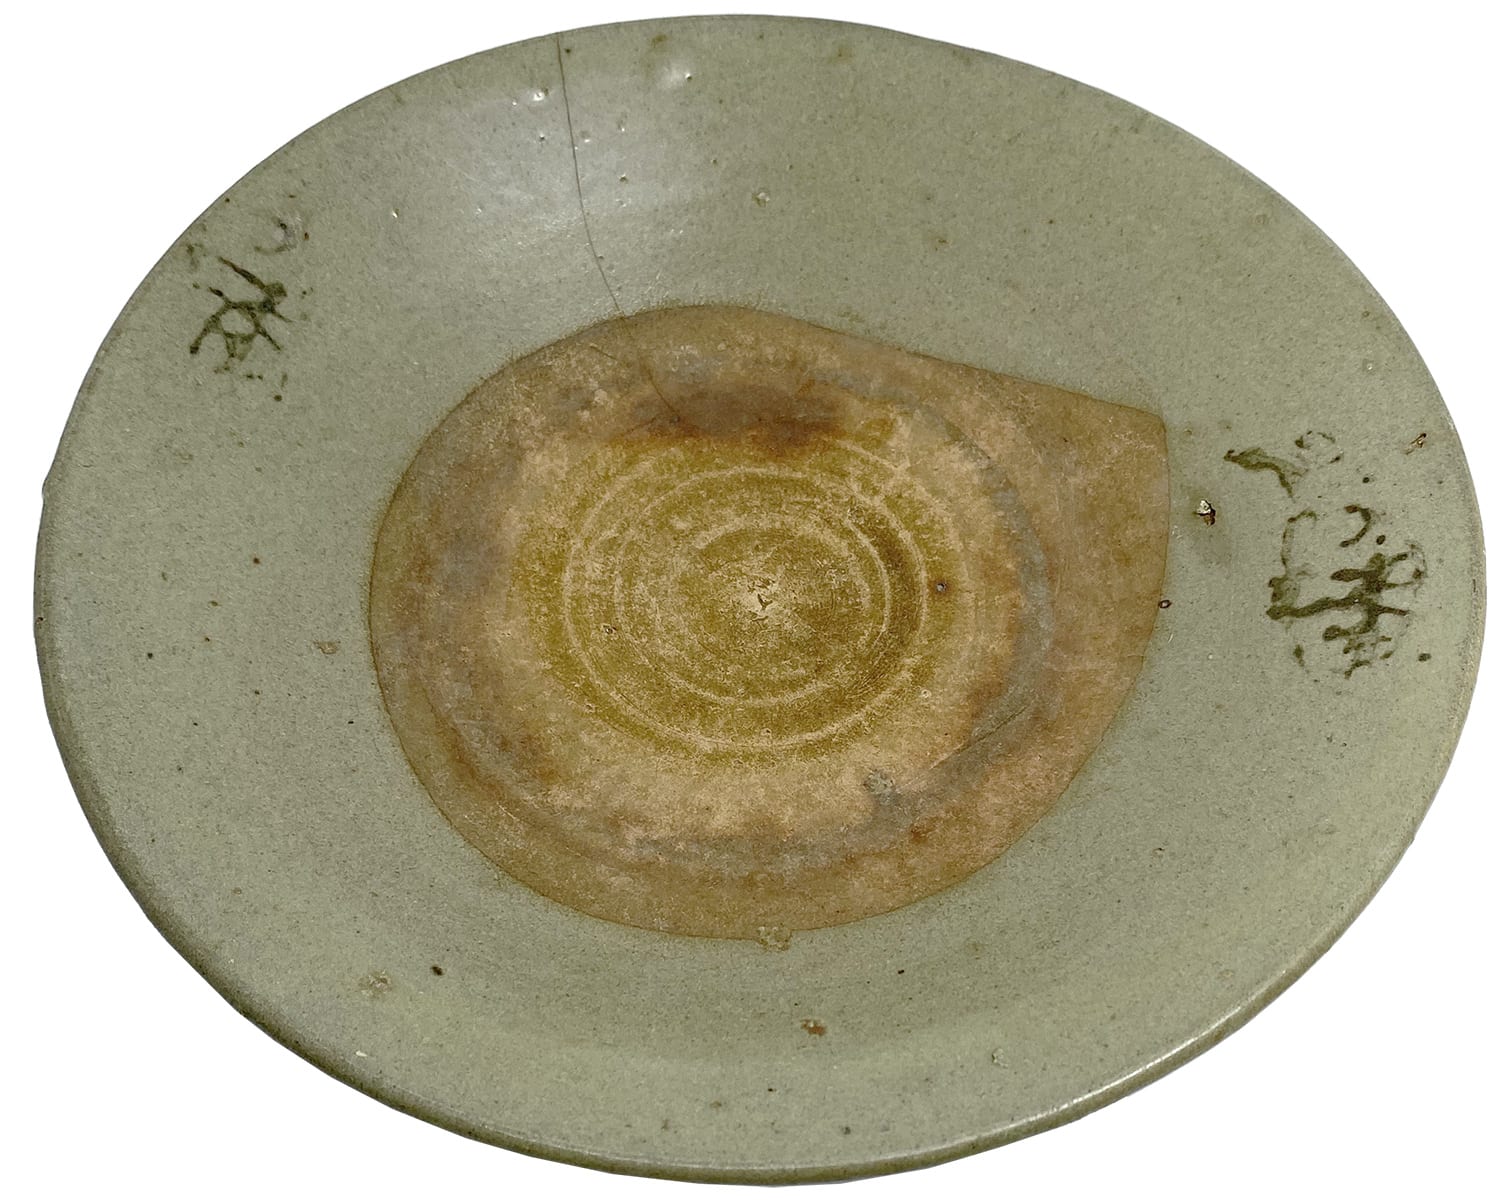 Antique Chinese Ceramic Plate Bowl